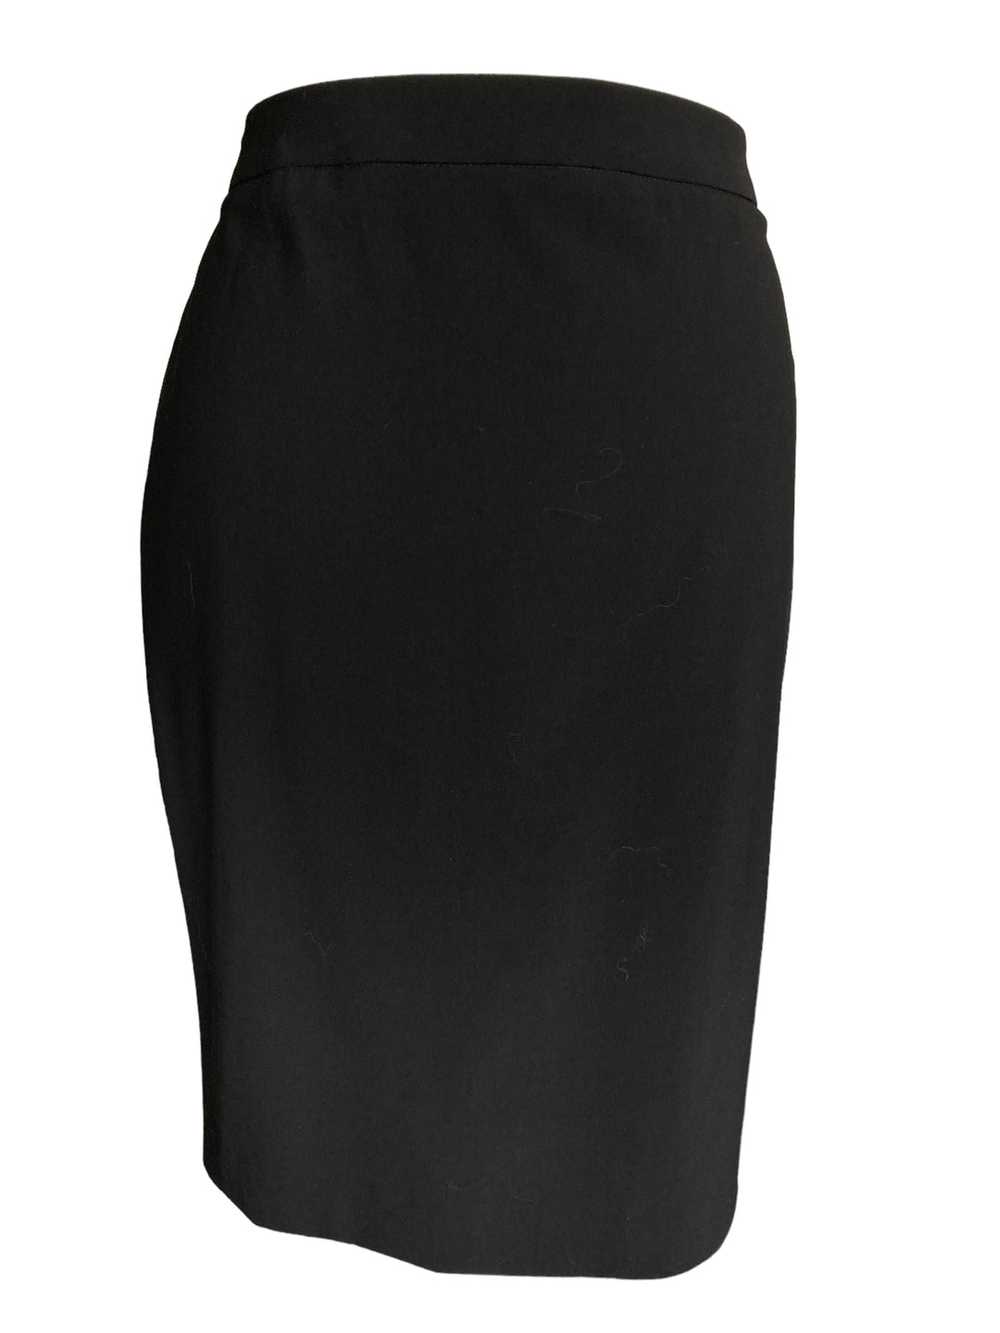 Wolford Black Pencil Skirt, M - image 1